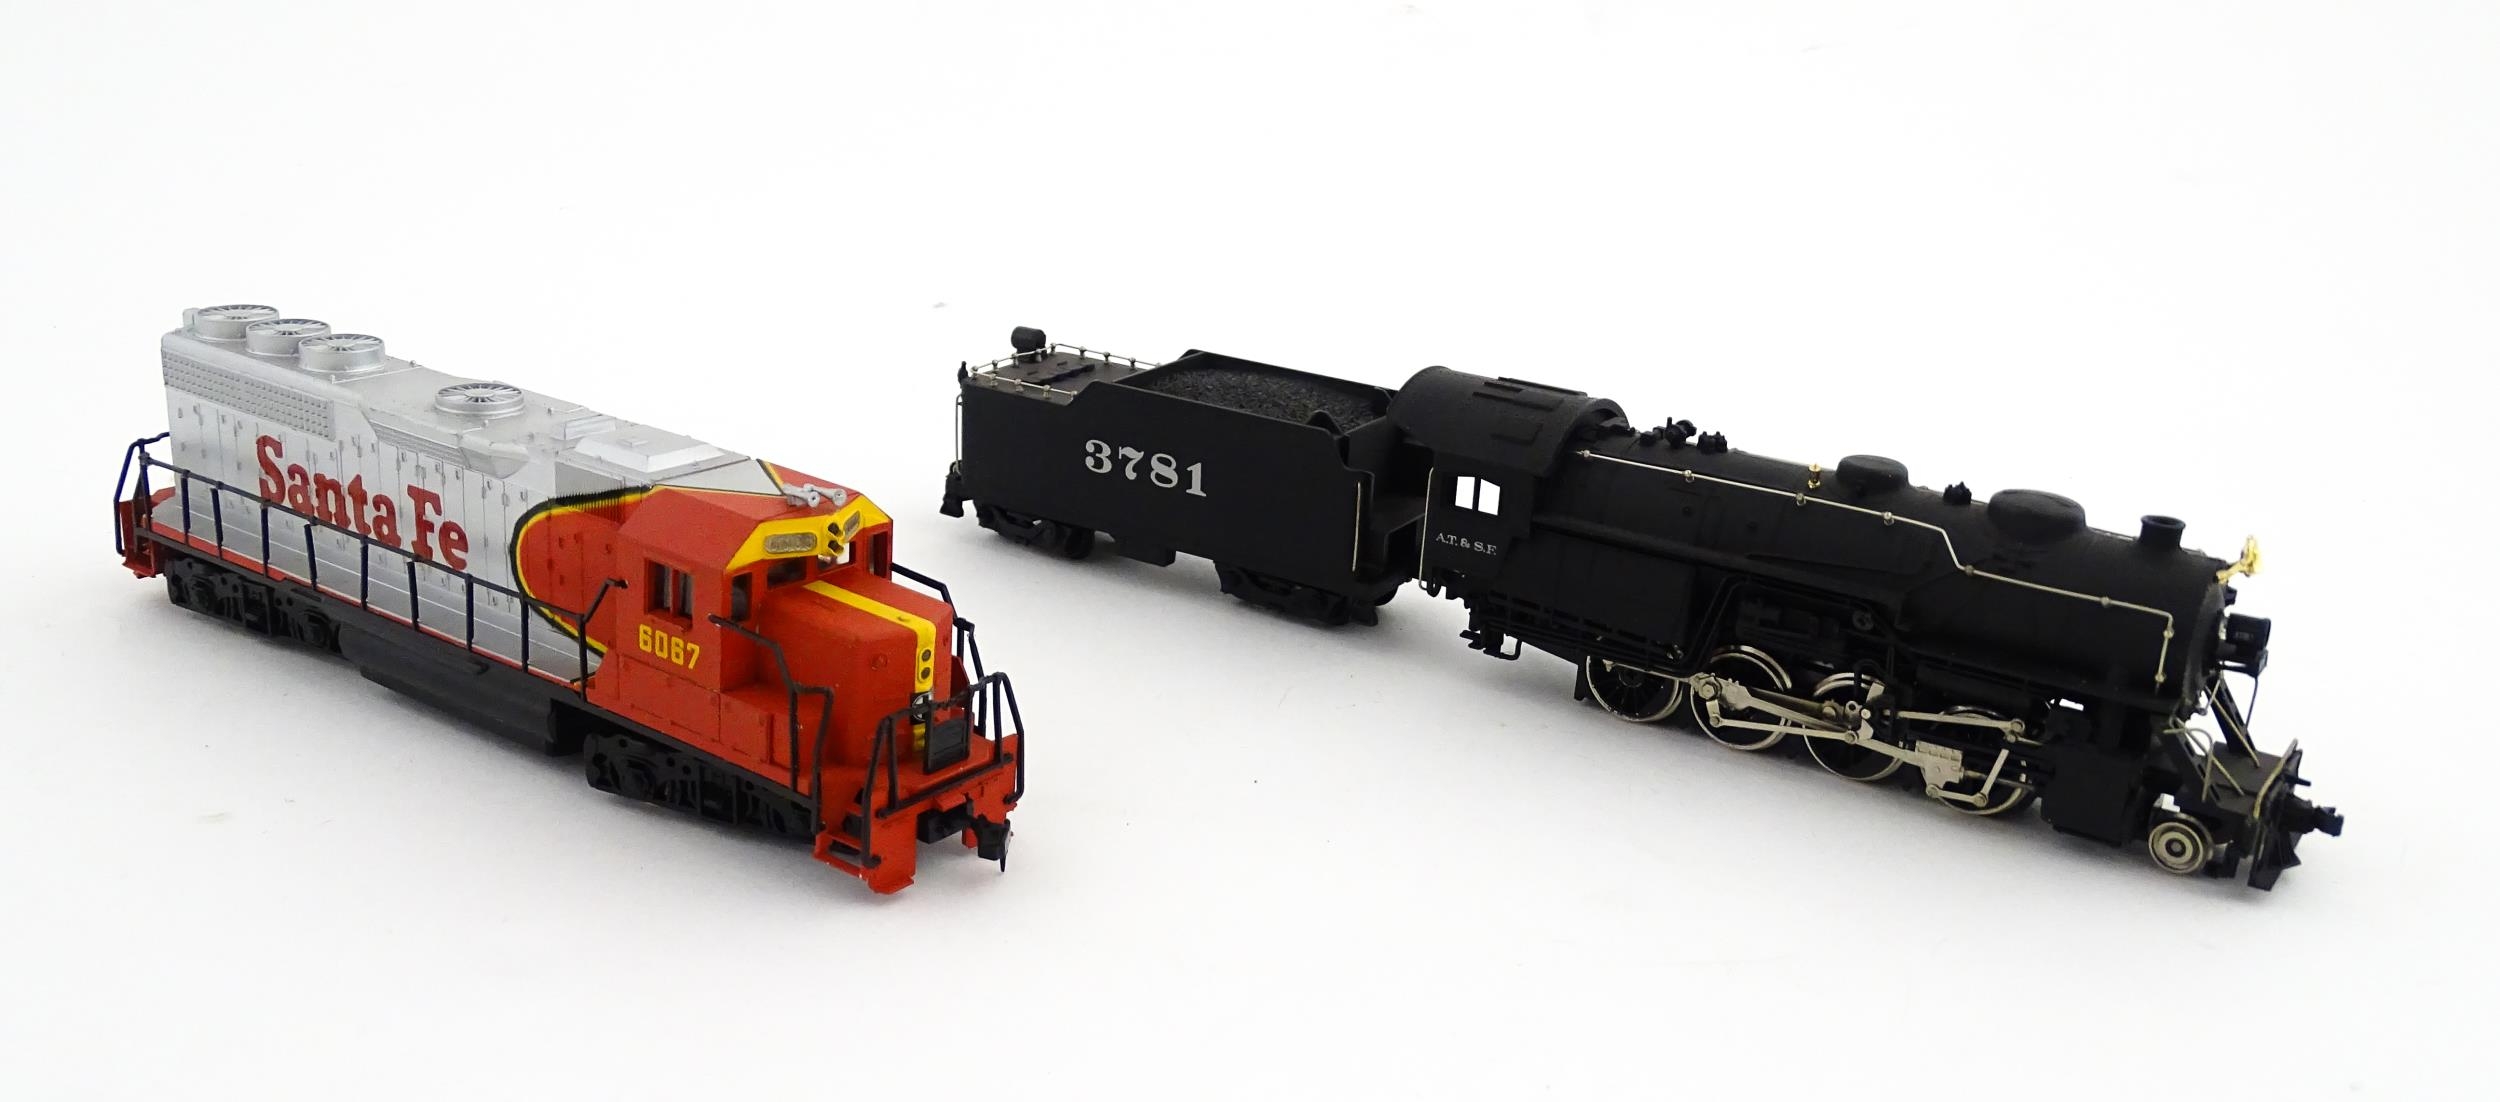 Toys - Model Train / Railway Interest : Bachmann HO scale model electric train / locomotive no. - Image 4 of 16